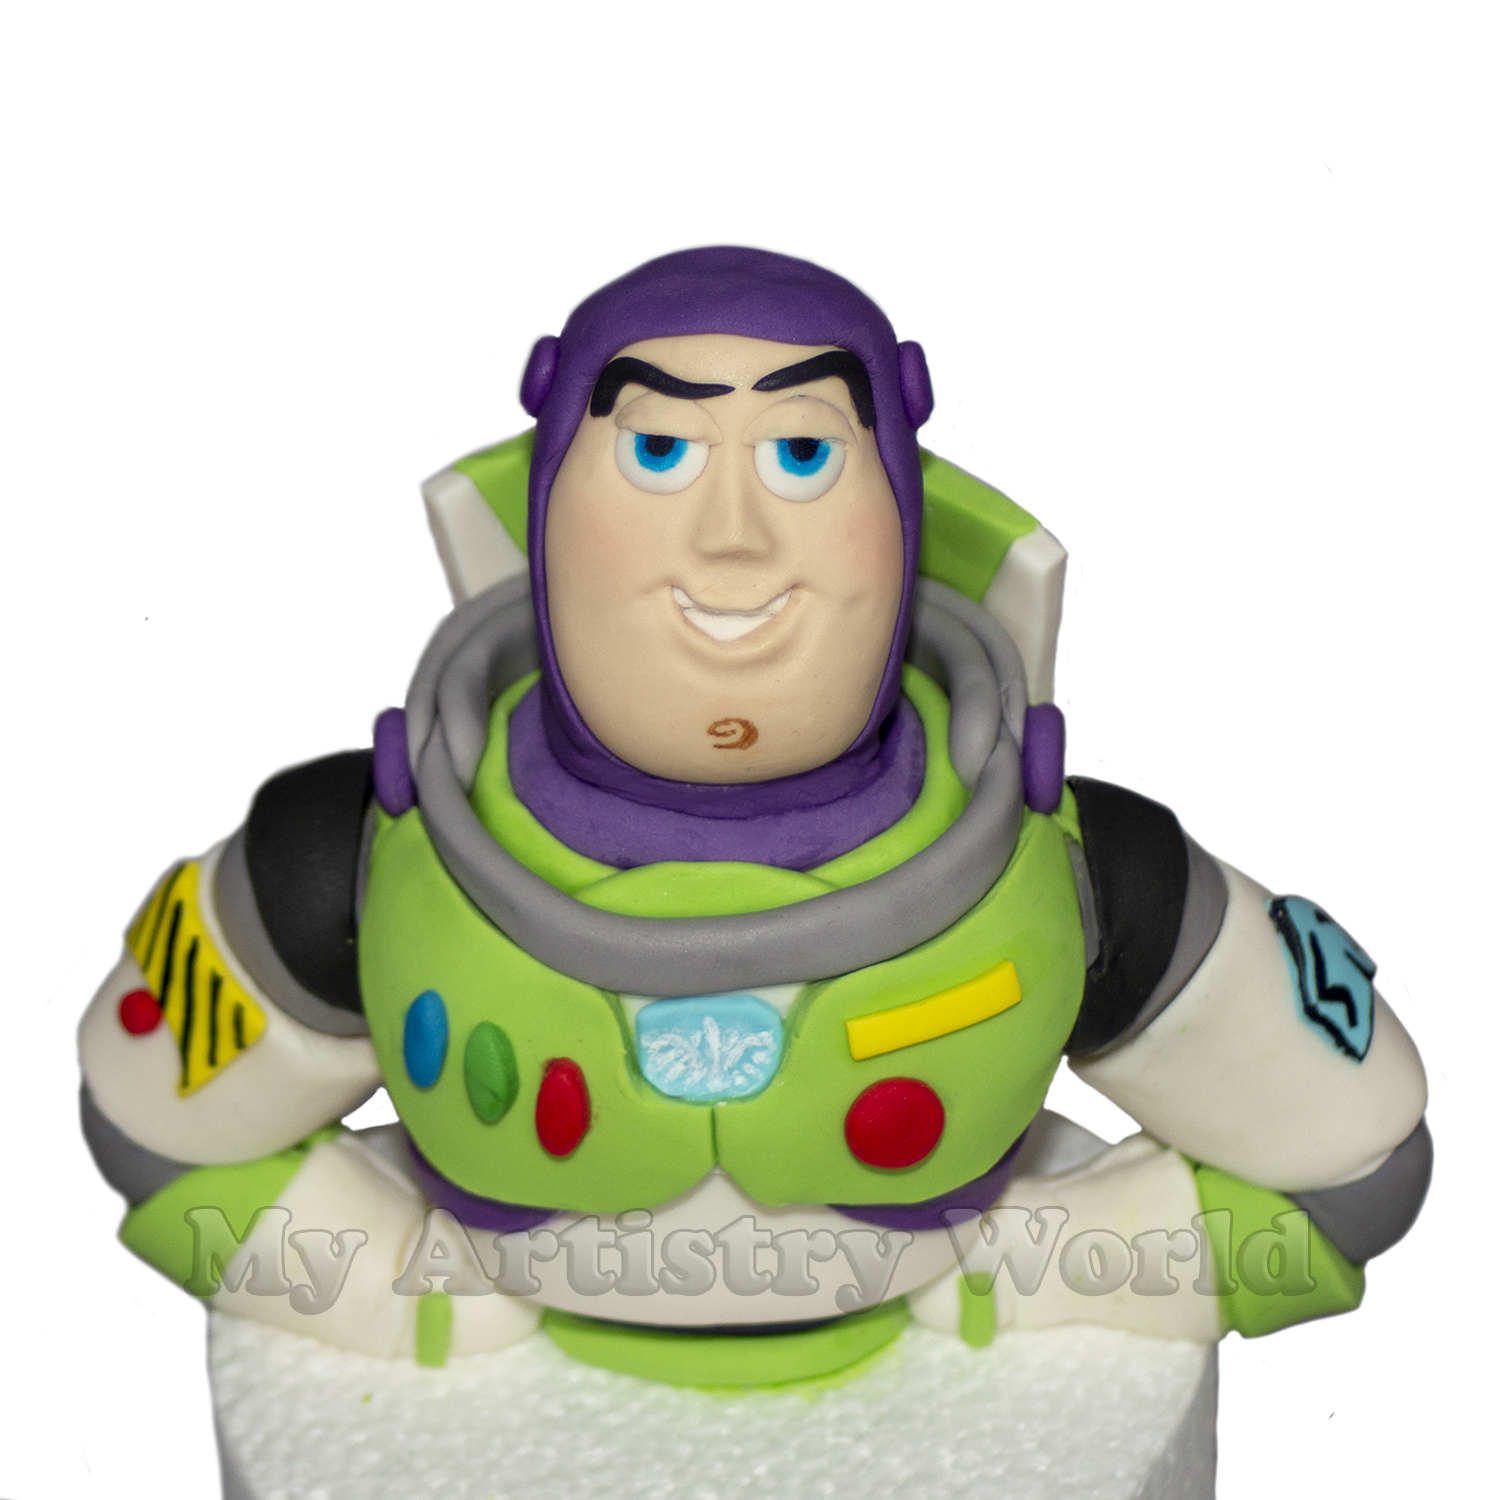 Buzz Lightyear Fondant Cake Topper